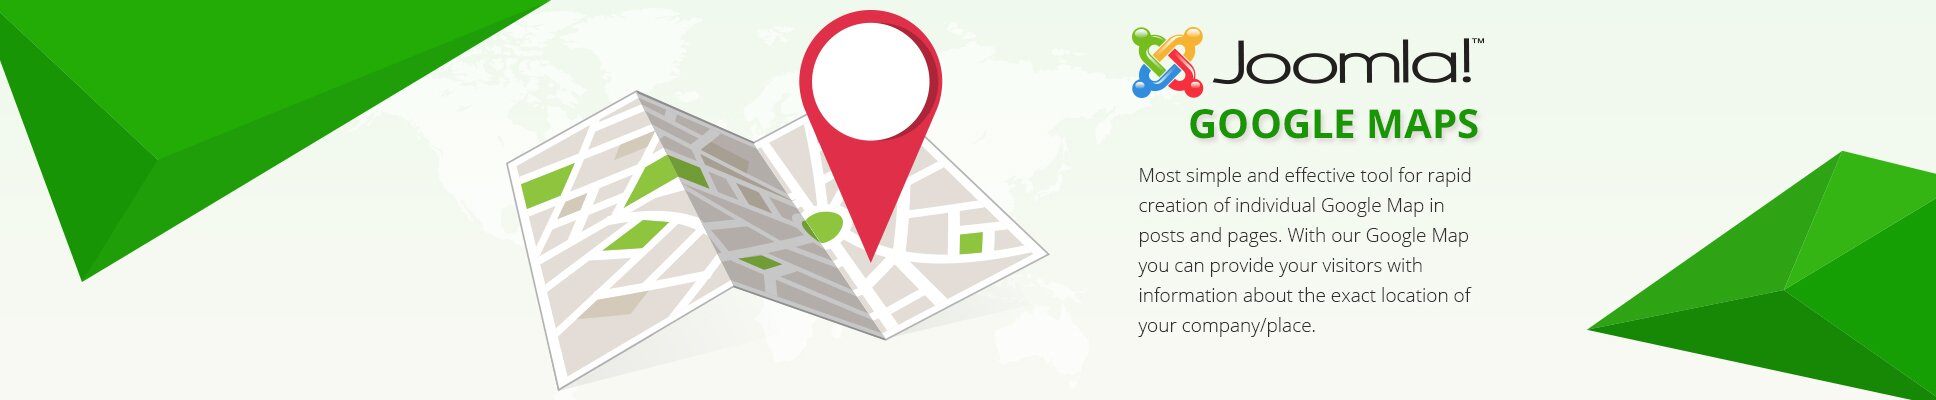 Joomla Google Maps Demo 2 Google Maps Markers